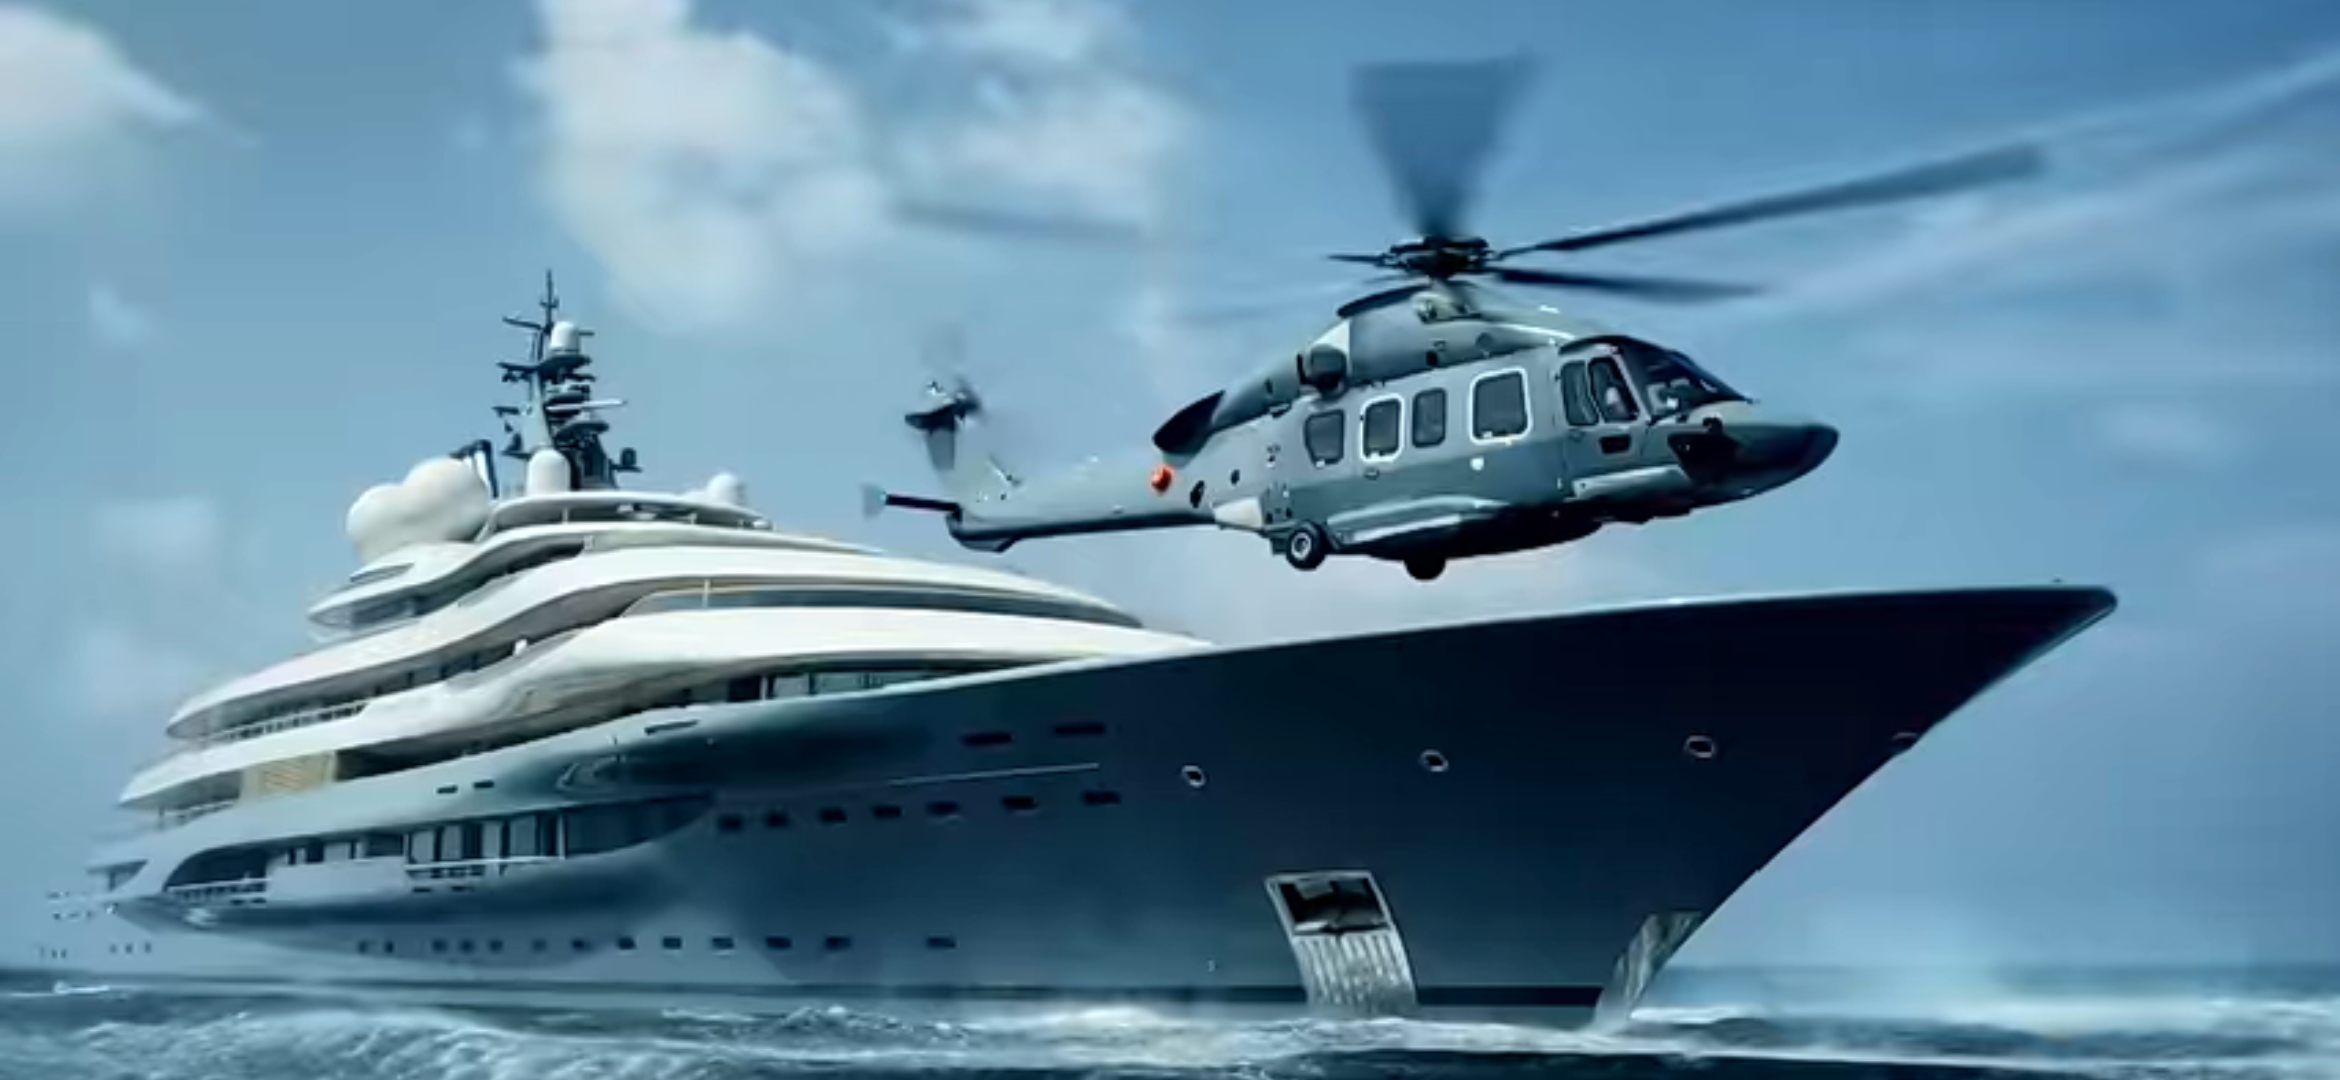 super yachts 60million+ - Page 260 - Boats, Planes & Trains - PistonHeads